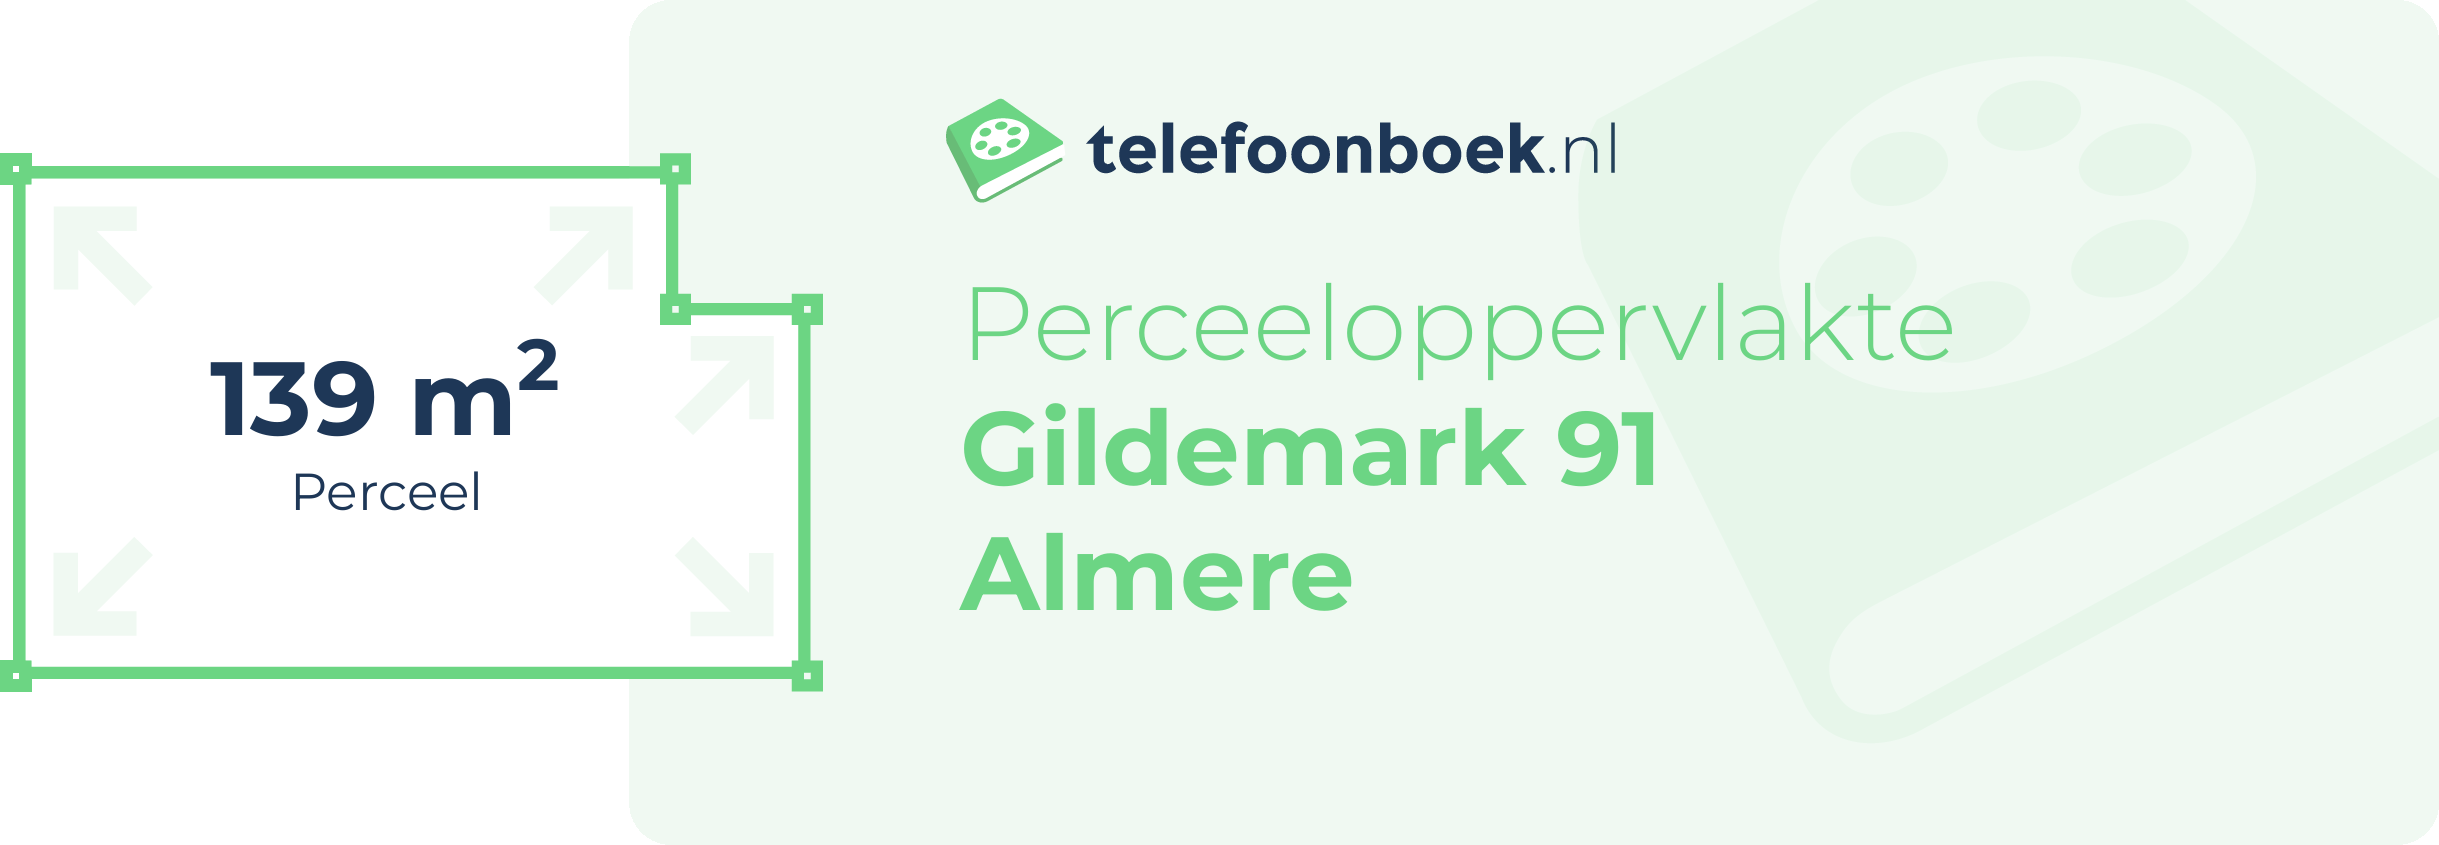 Perceeloppervlakte Gildemark 91 Almere